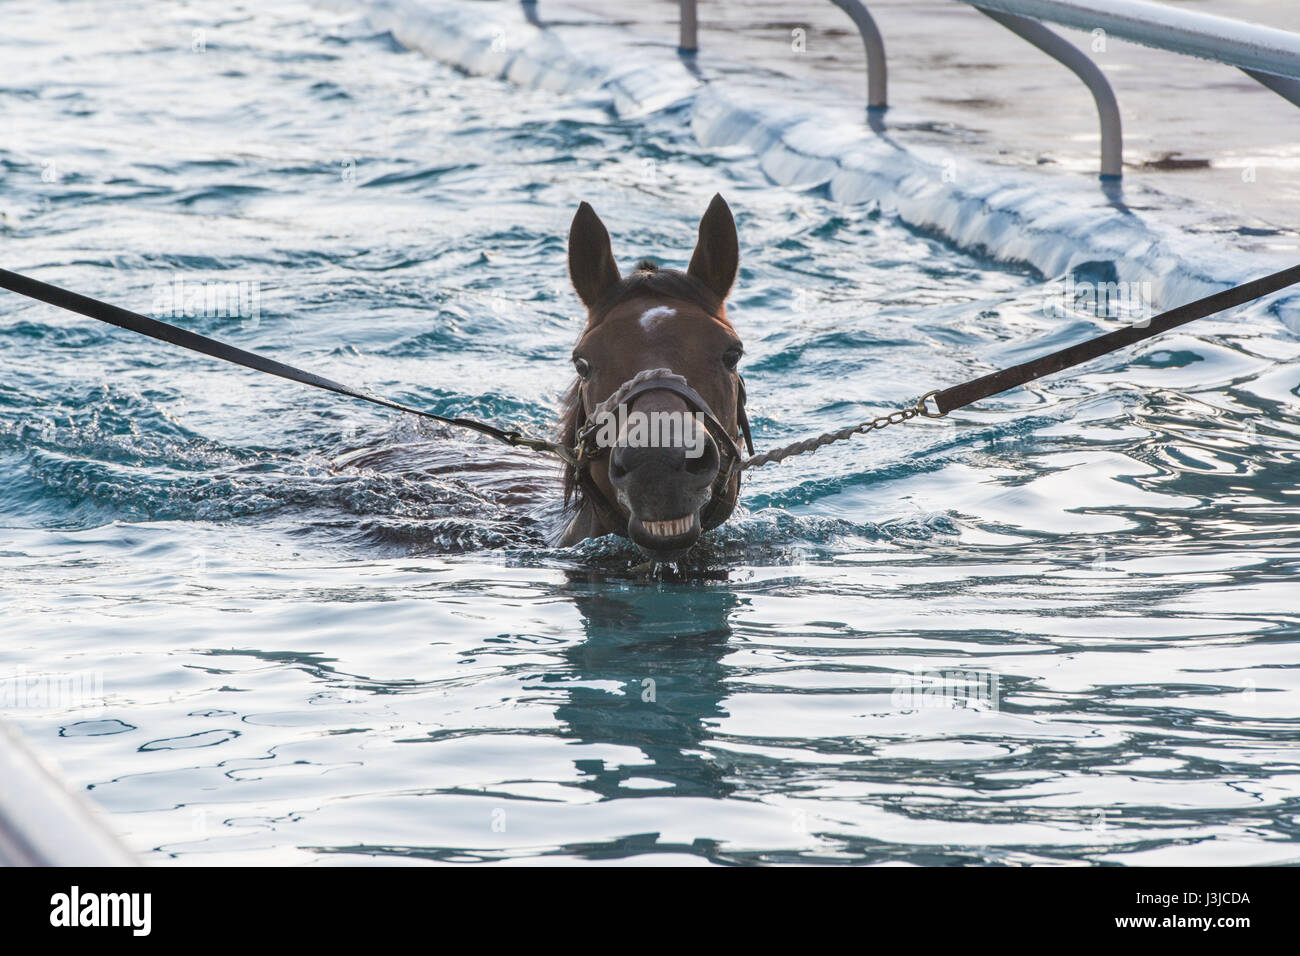 United Arab Emirates - Racing horse trains in water in Dubai Stock Photo